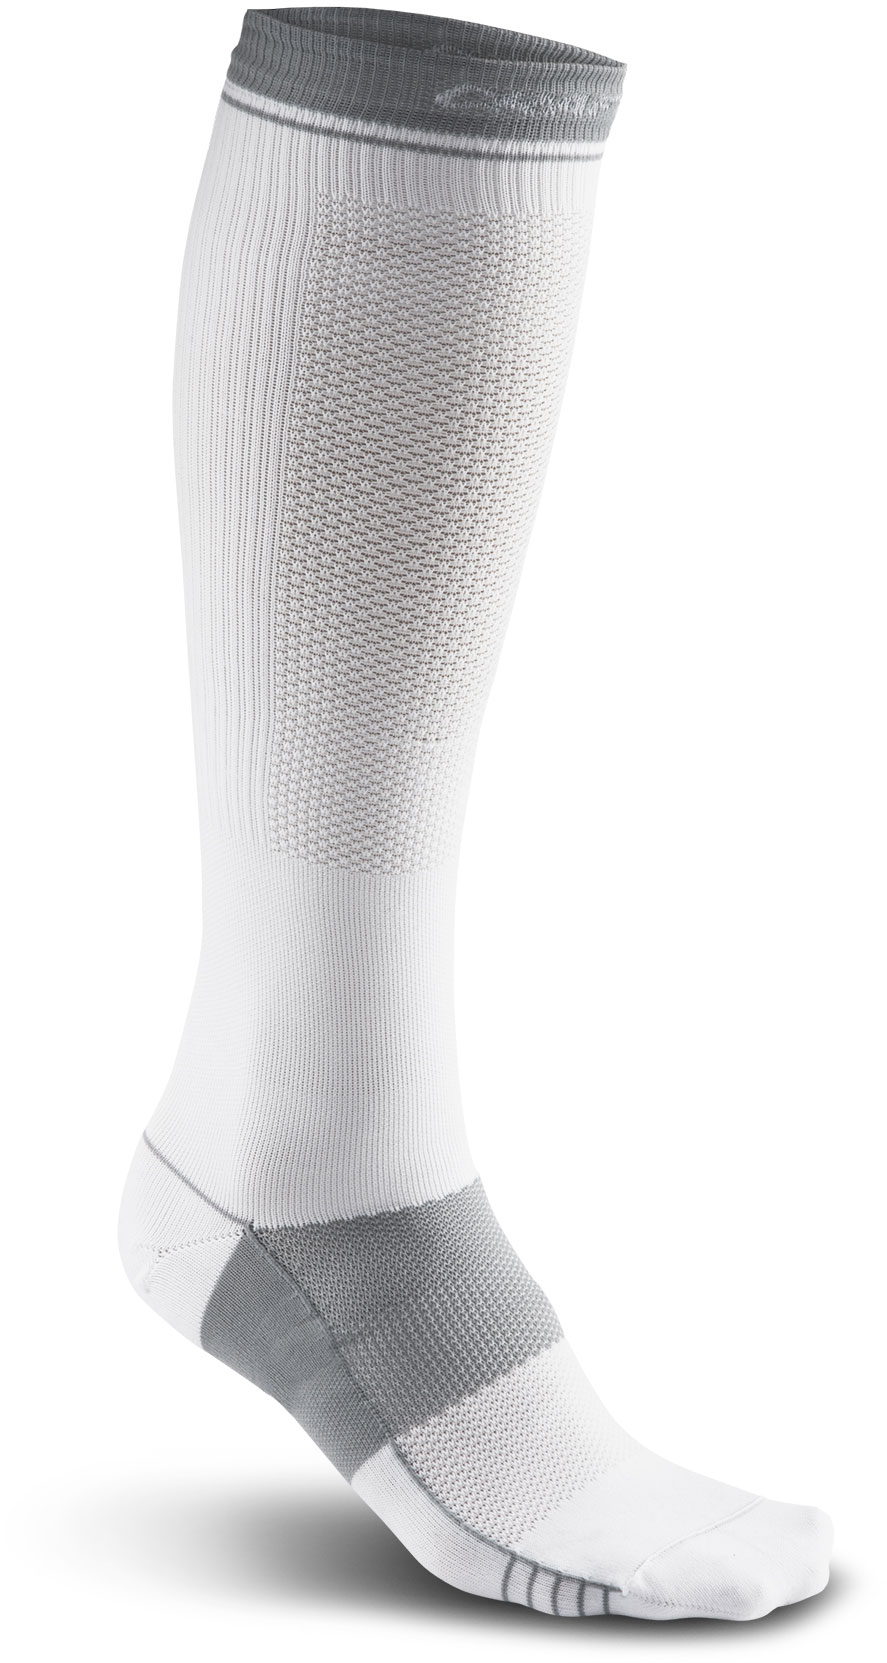 Compression knee socks